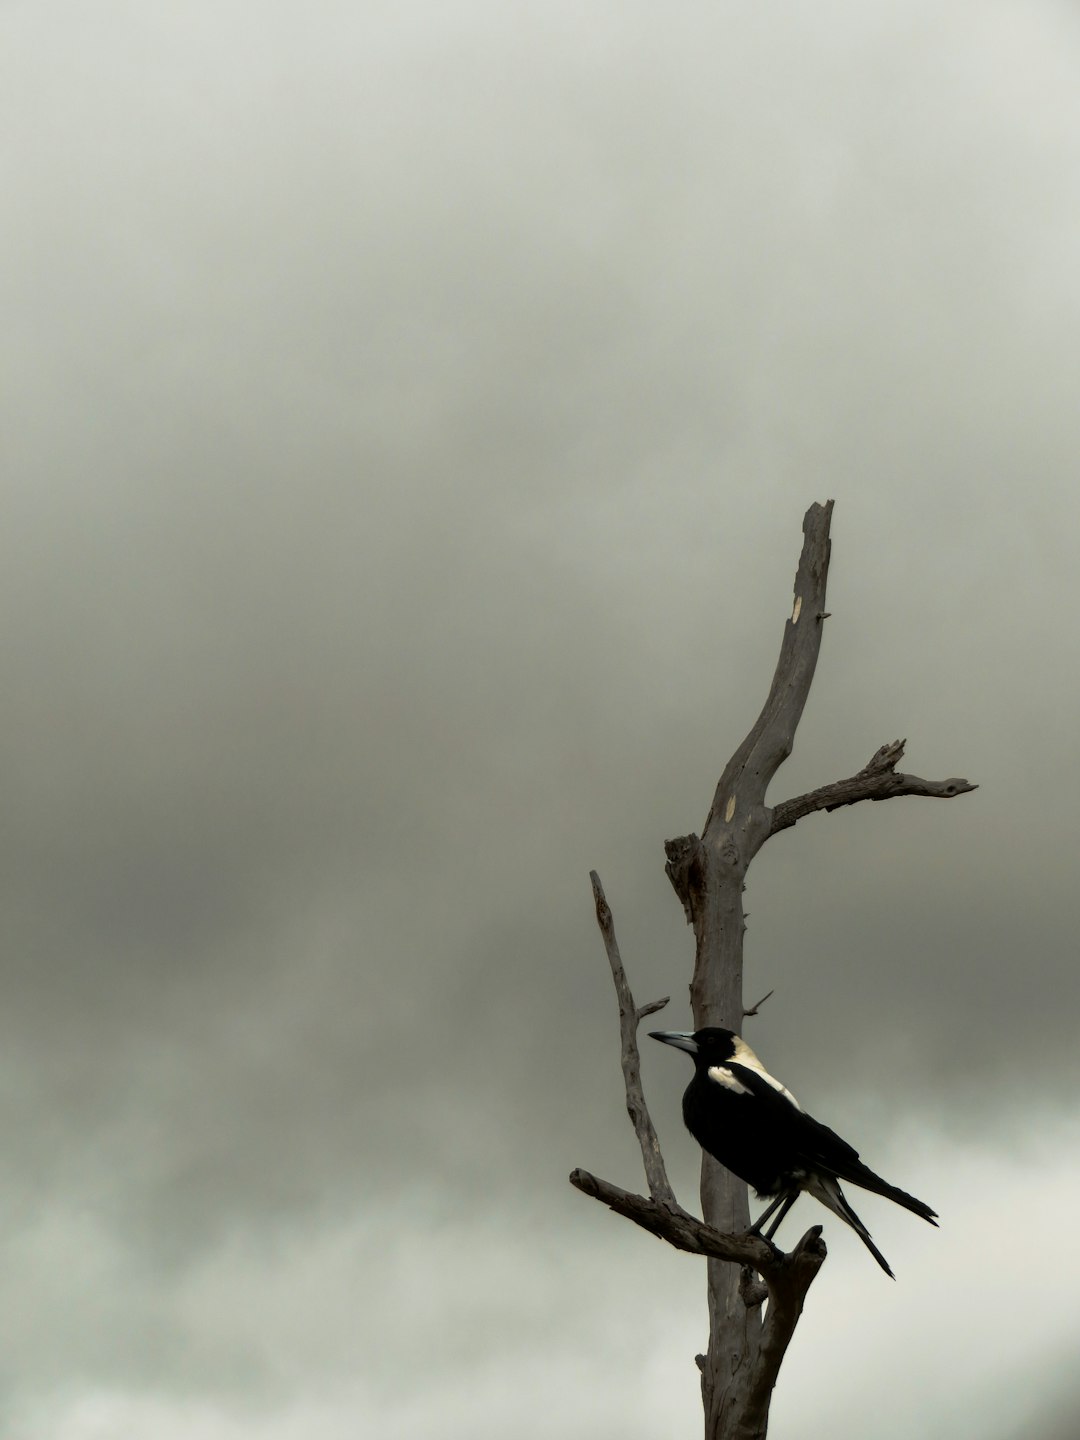 black crow resting on leafless tree under dark cloudy sky